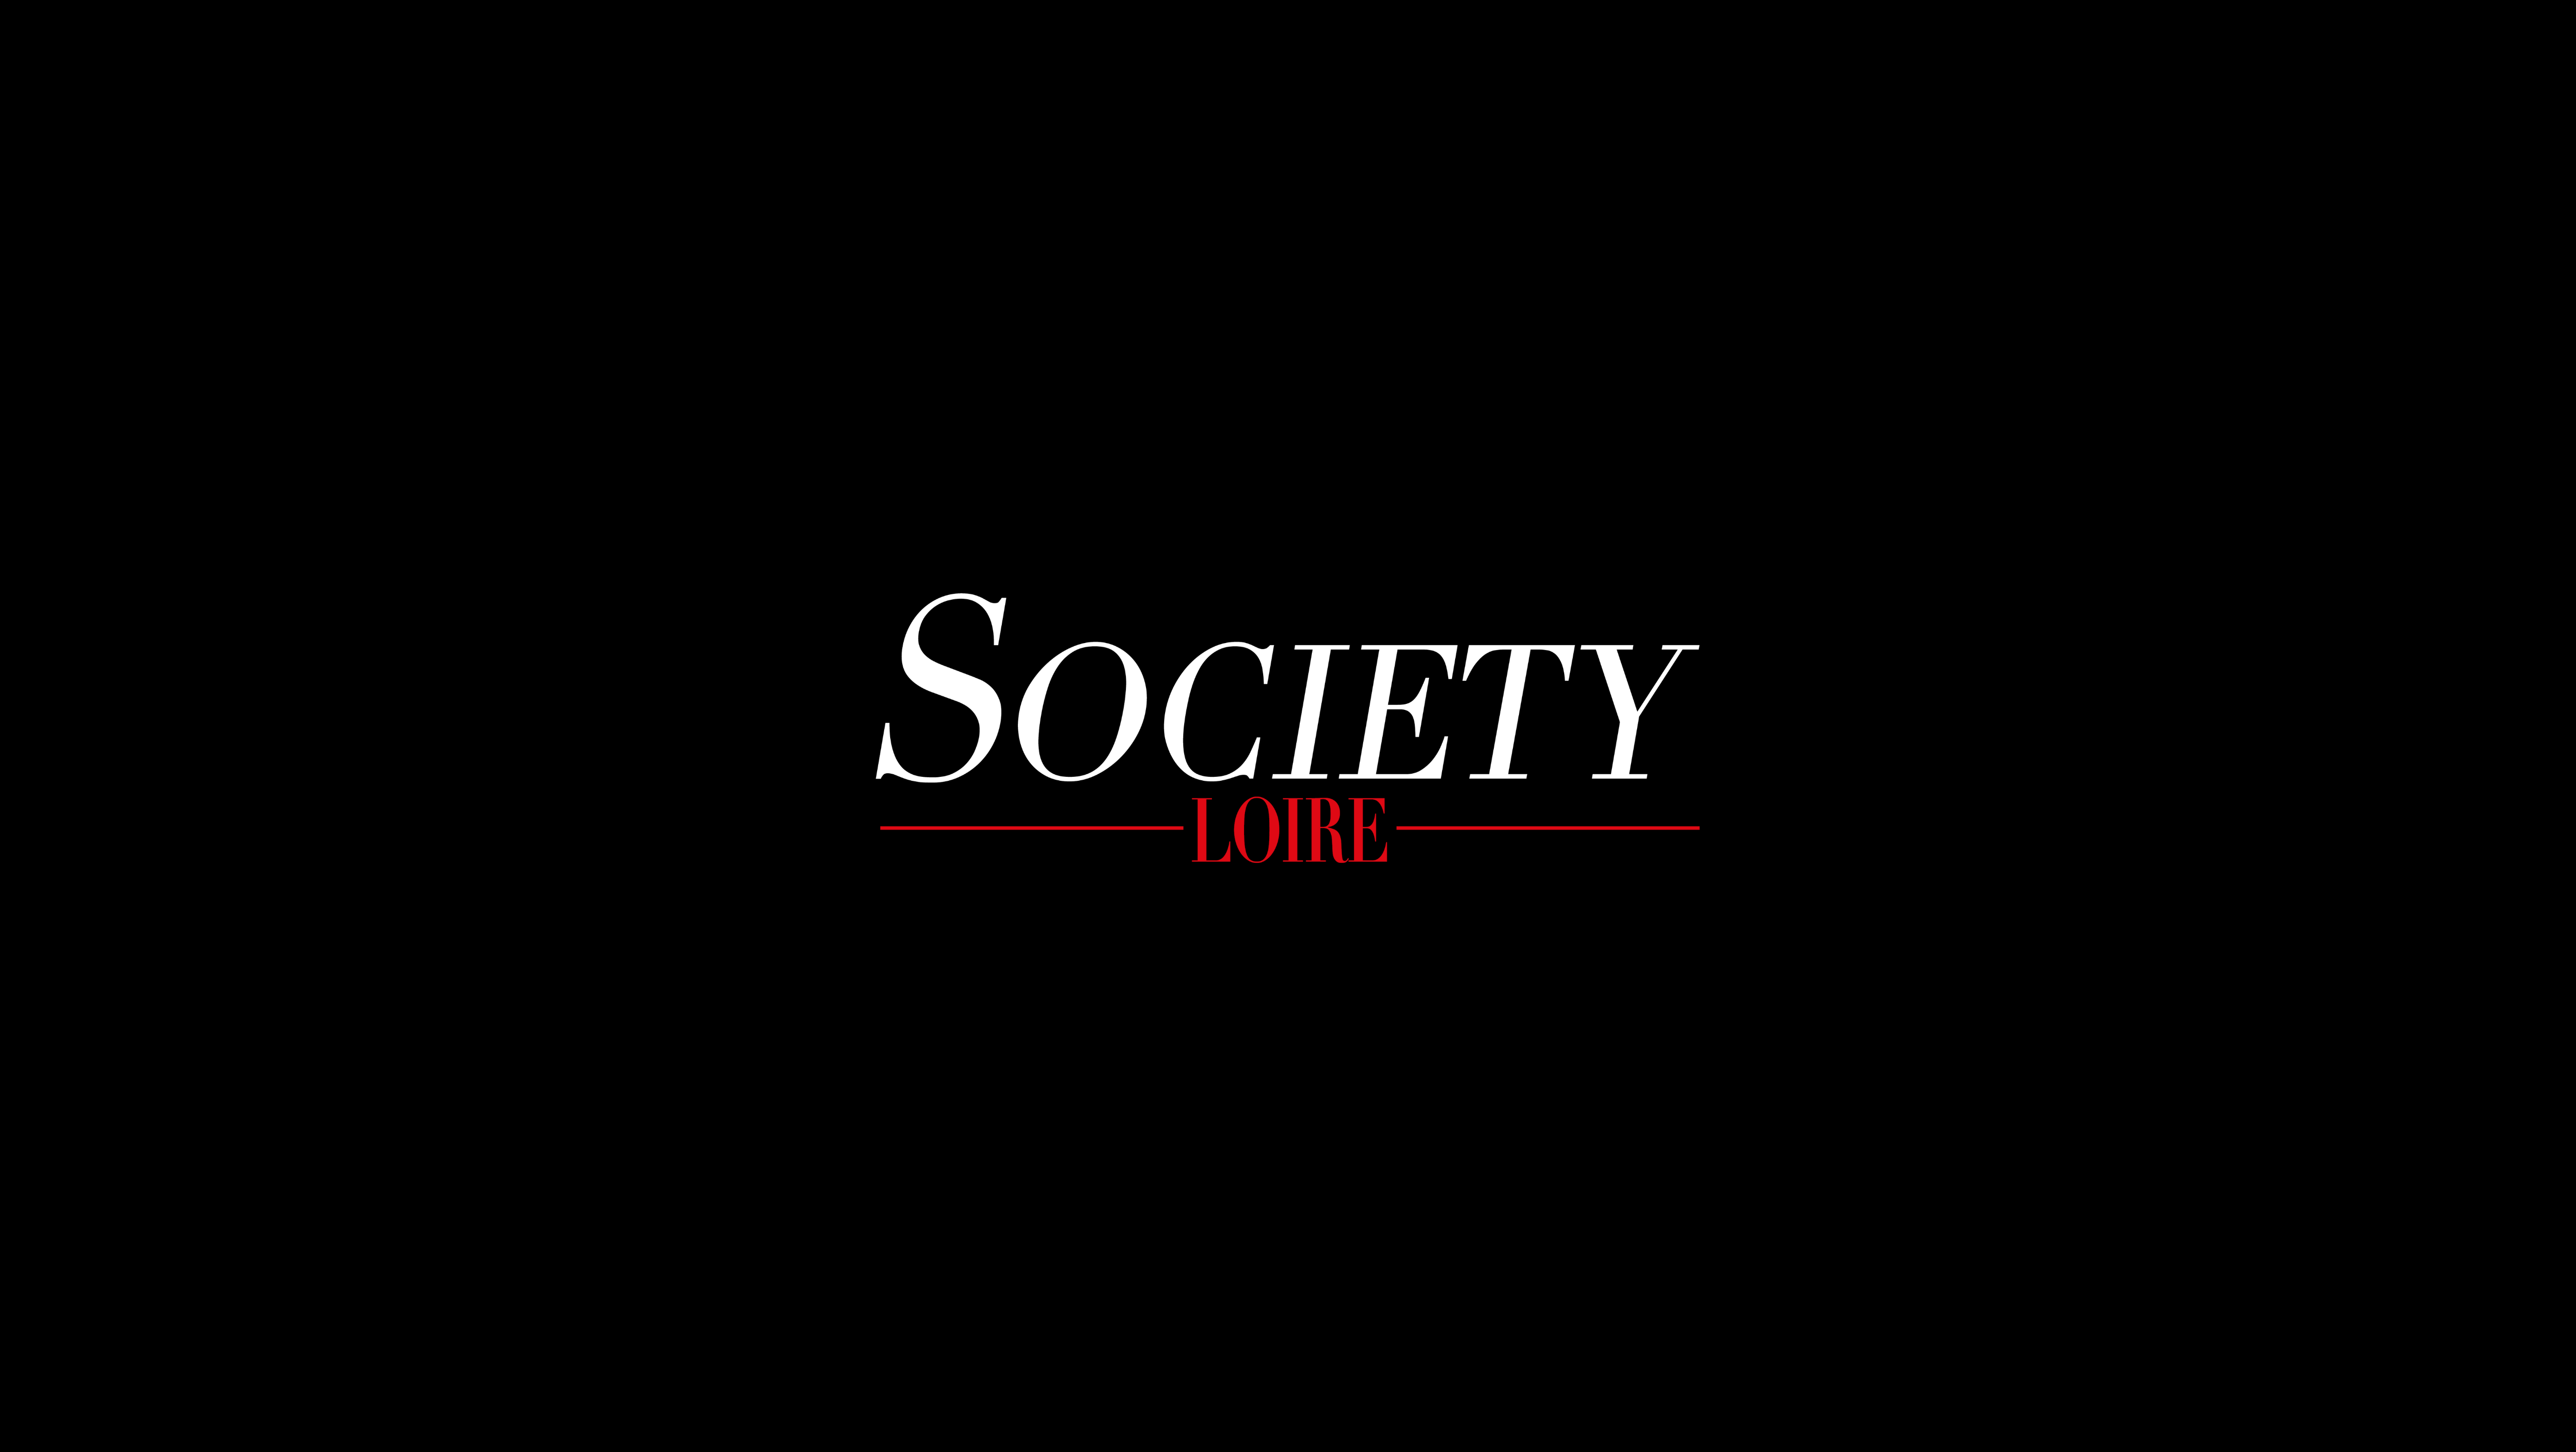 SOCIETY LOIRE